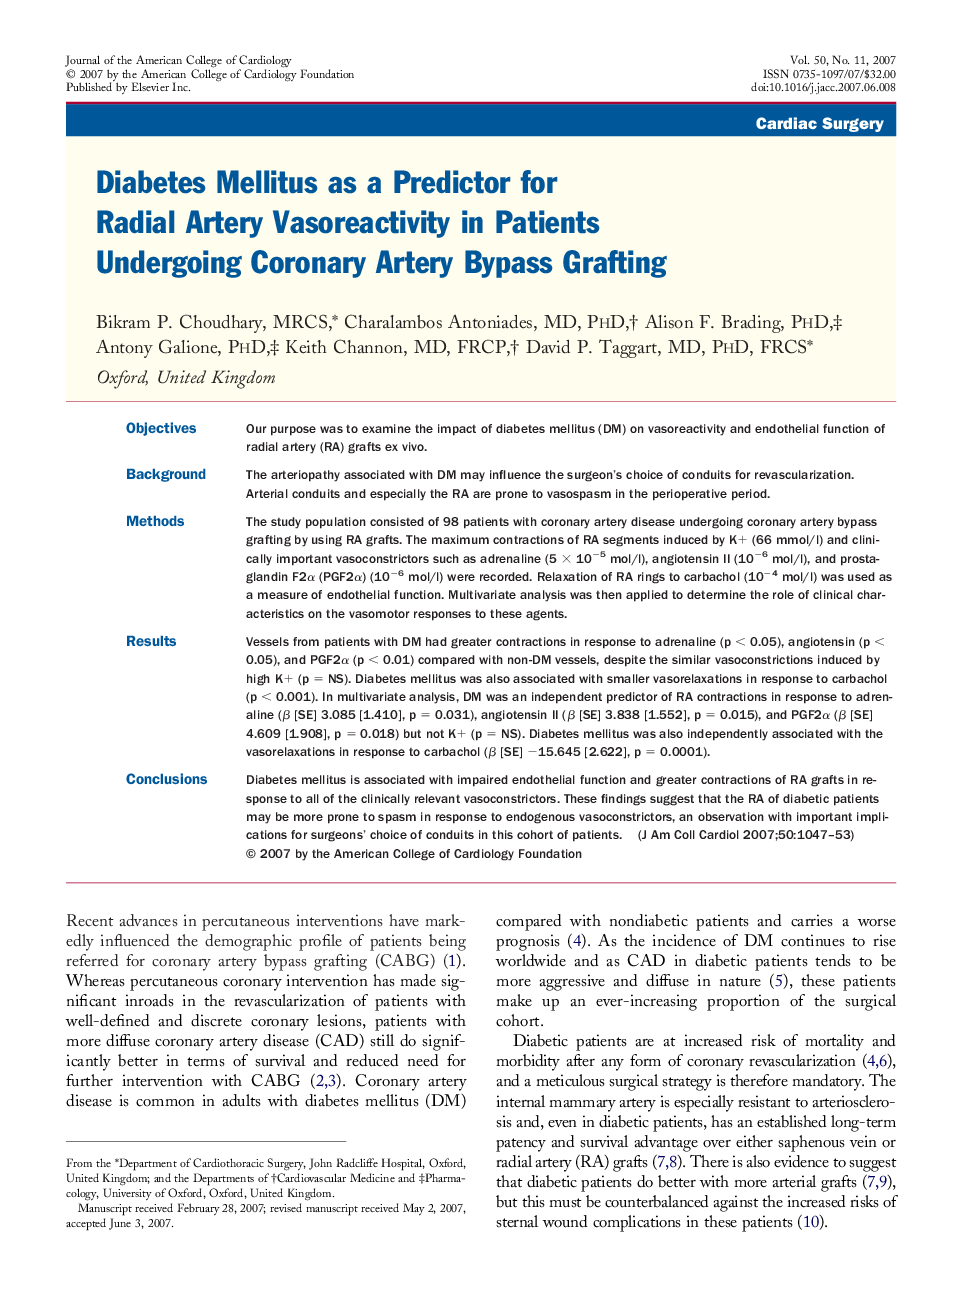 Diabetes Mellitus as a Predictor for Radial Artery Vasoreactivity in Patients Undergoing Coronary Artery Bypass Grafting